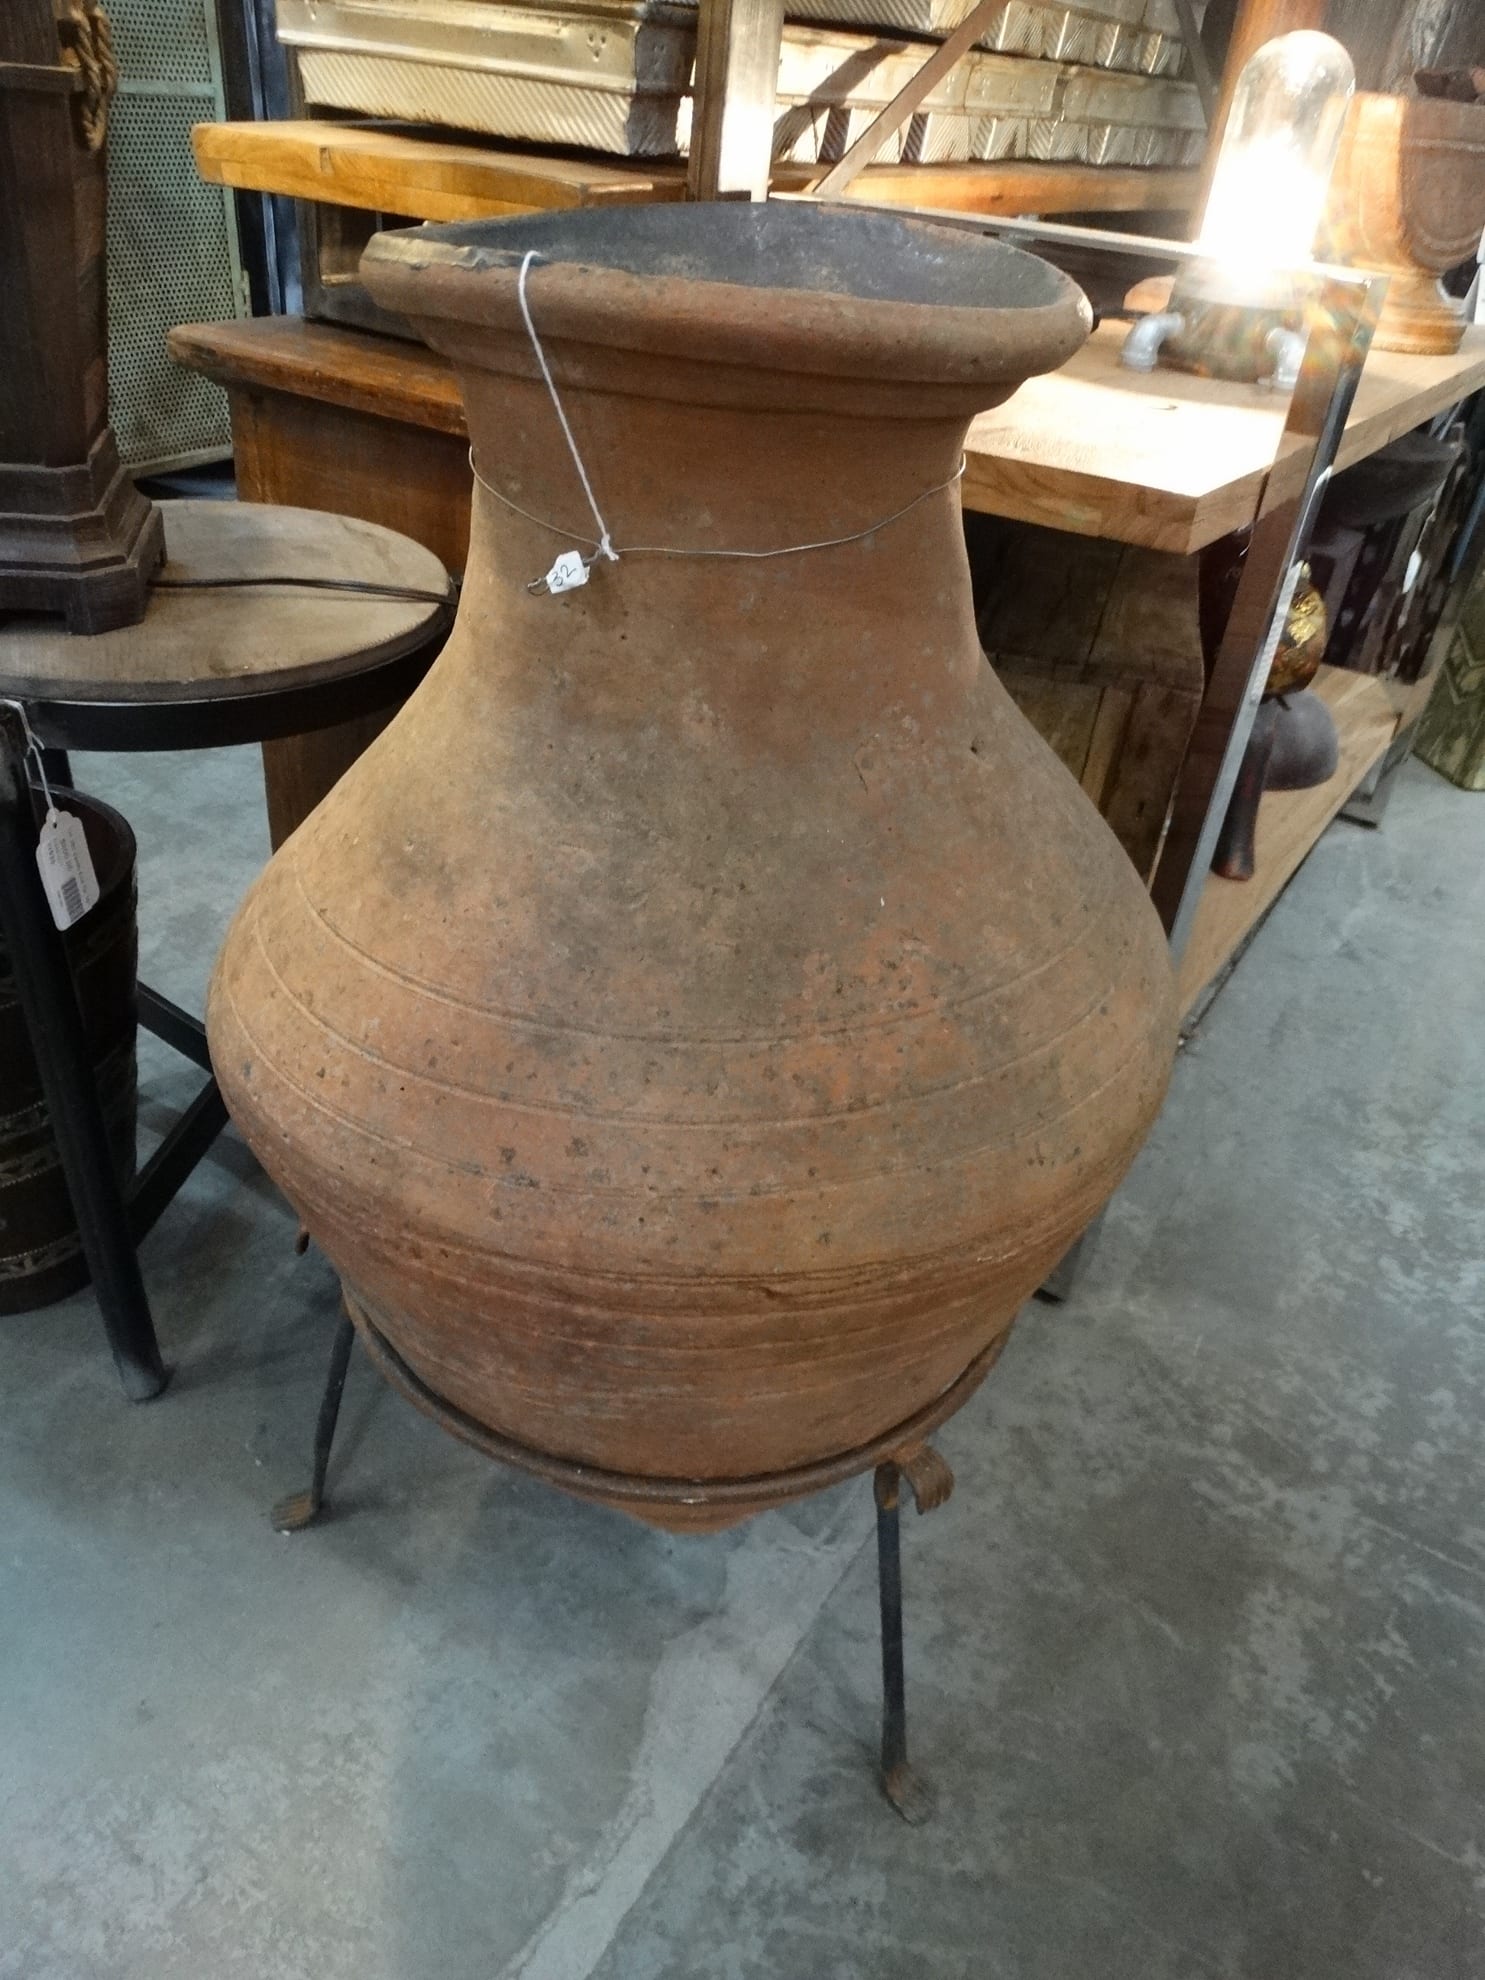 Pottery Large Turkish Pot Vase on Stand